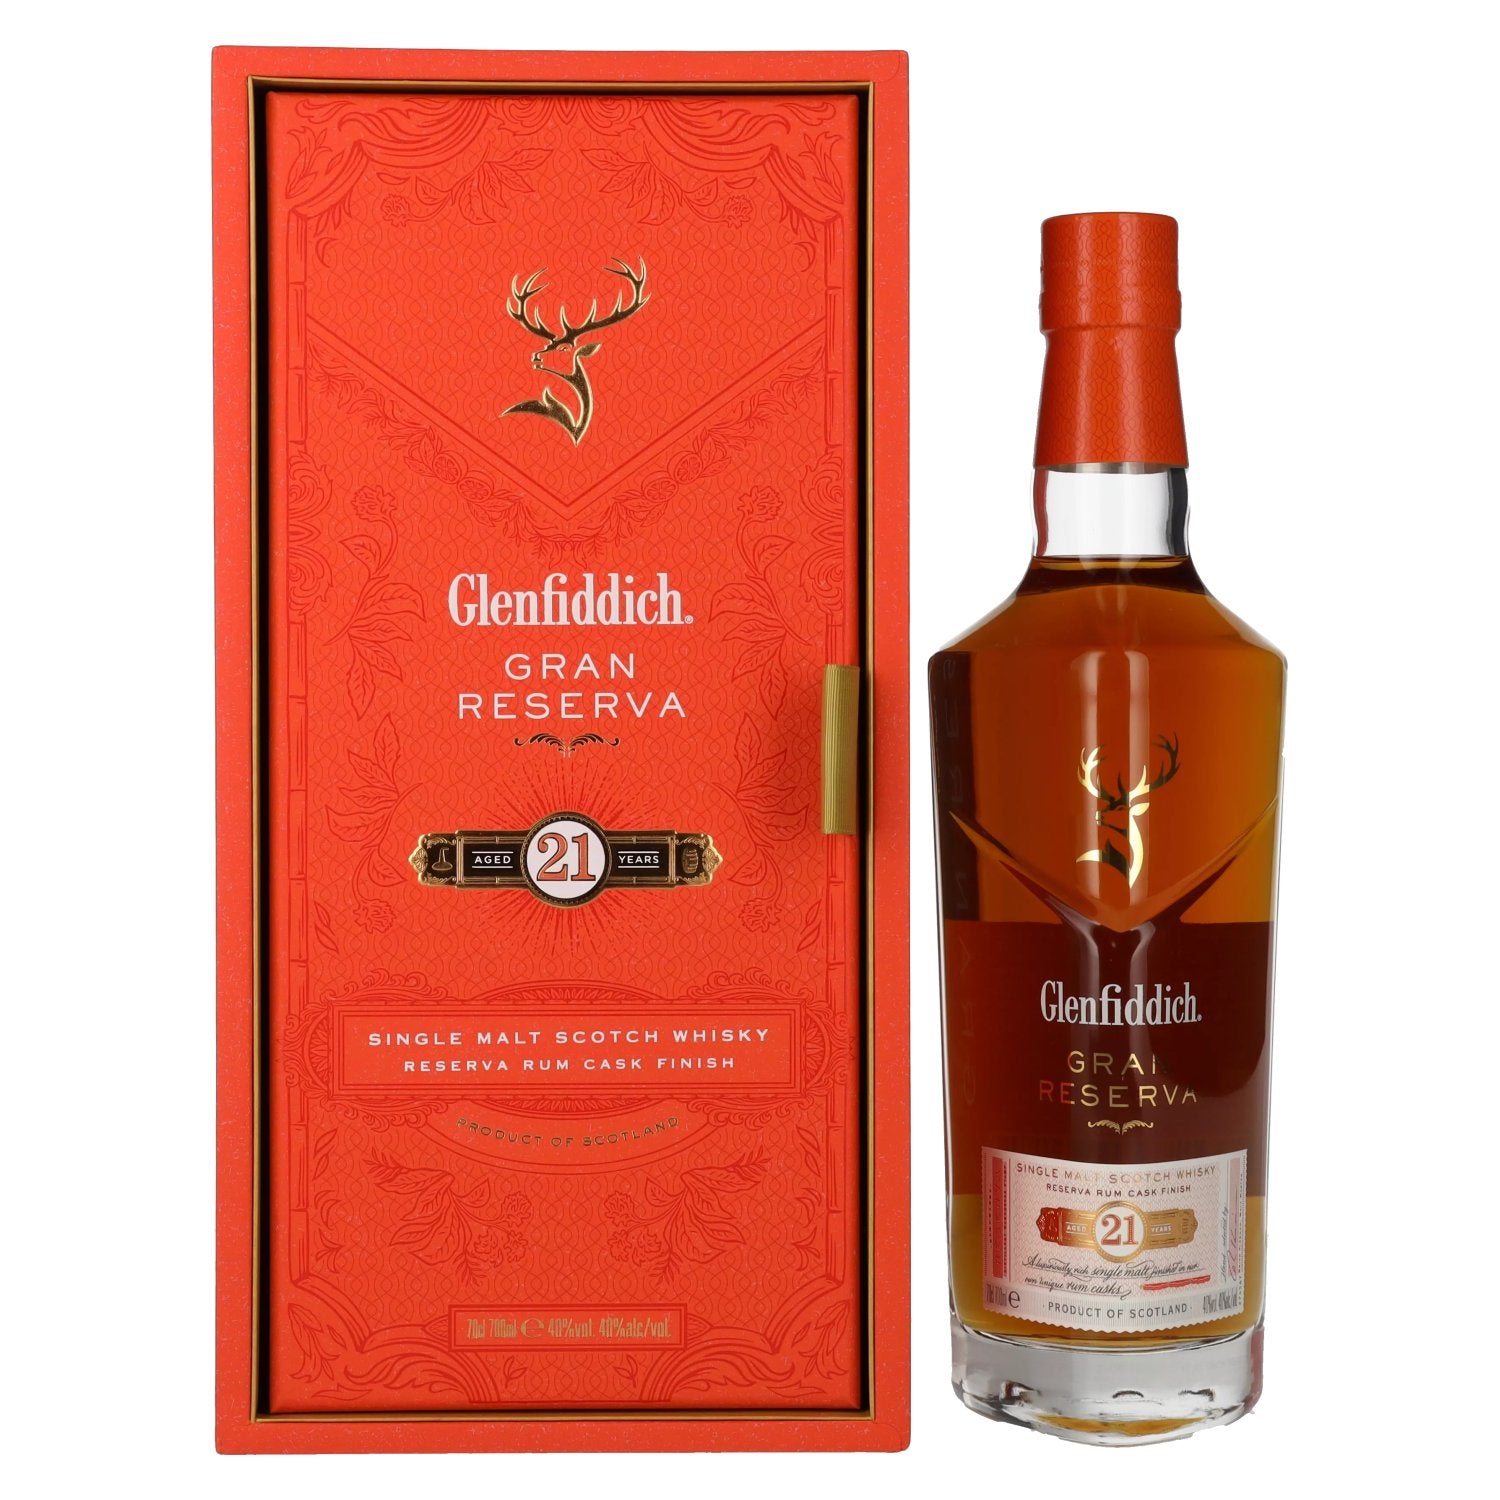 Glenfiddich 21 Years Old GRAN RESERVA Rum Cask Finish 40% Vol. 0,7l in Giftbox